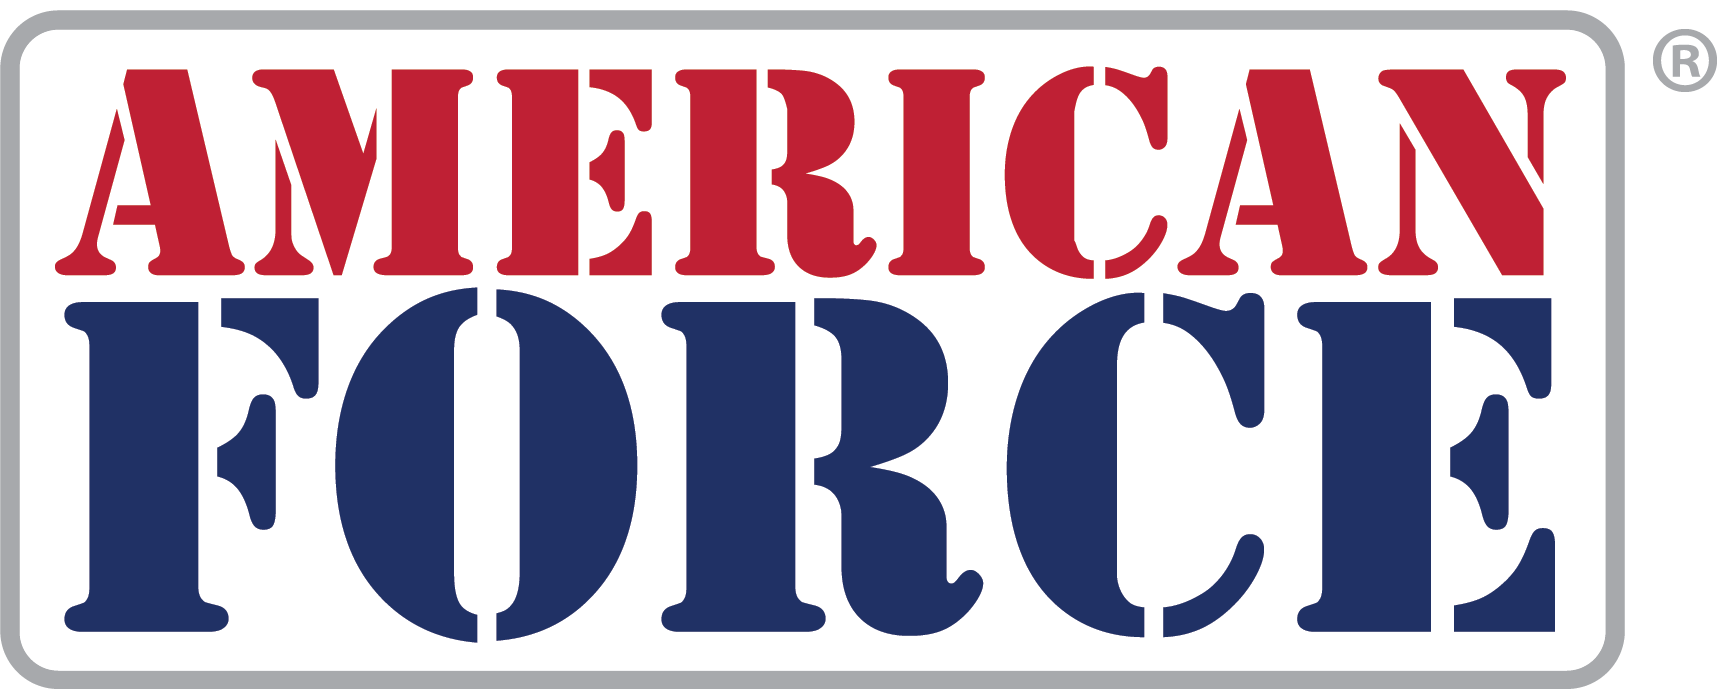 American force Logo 